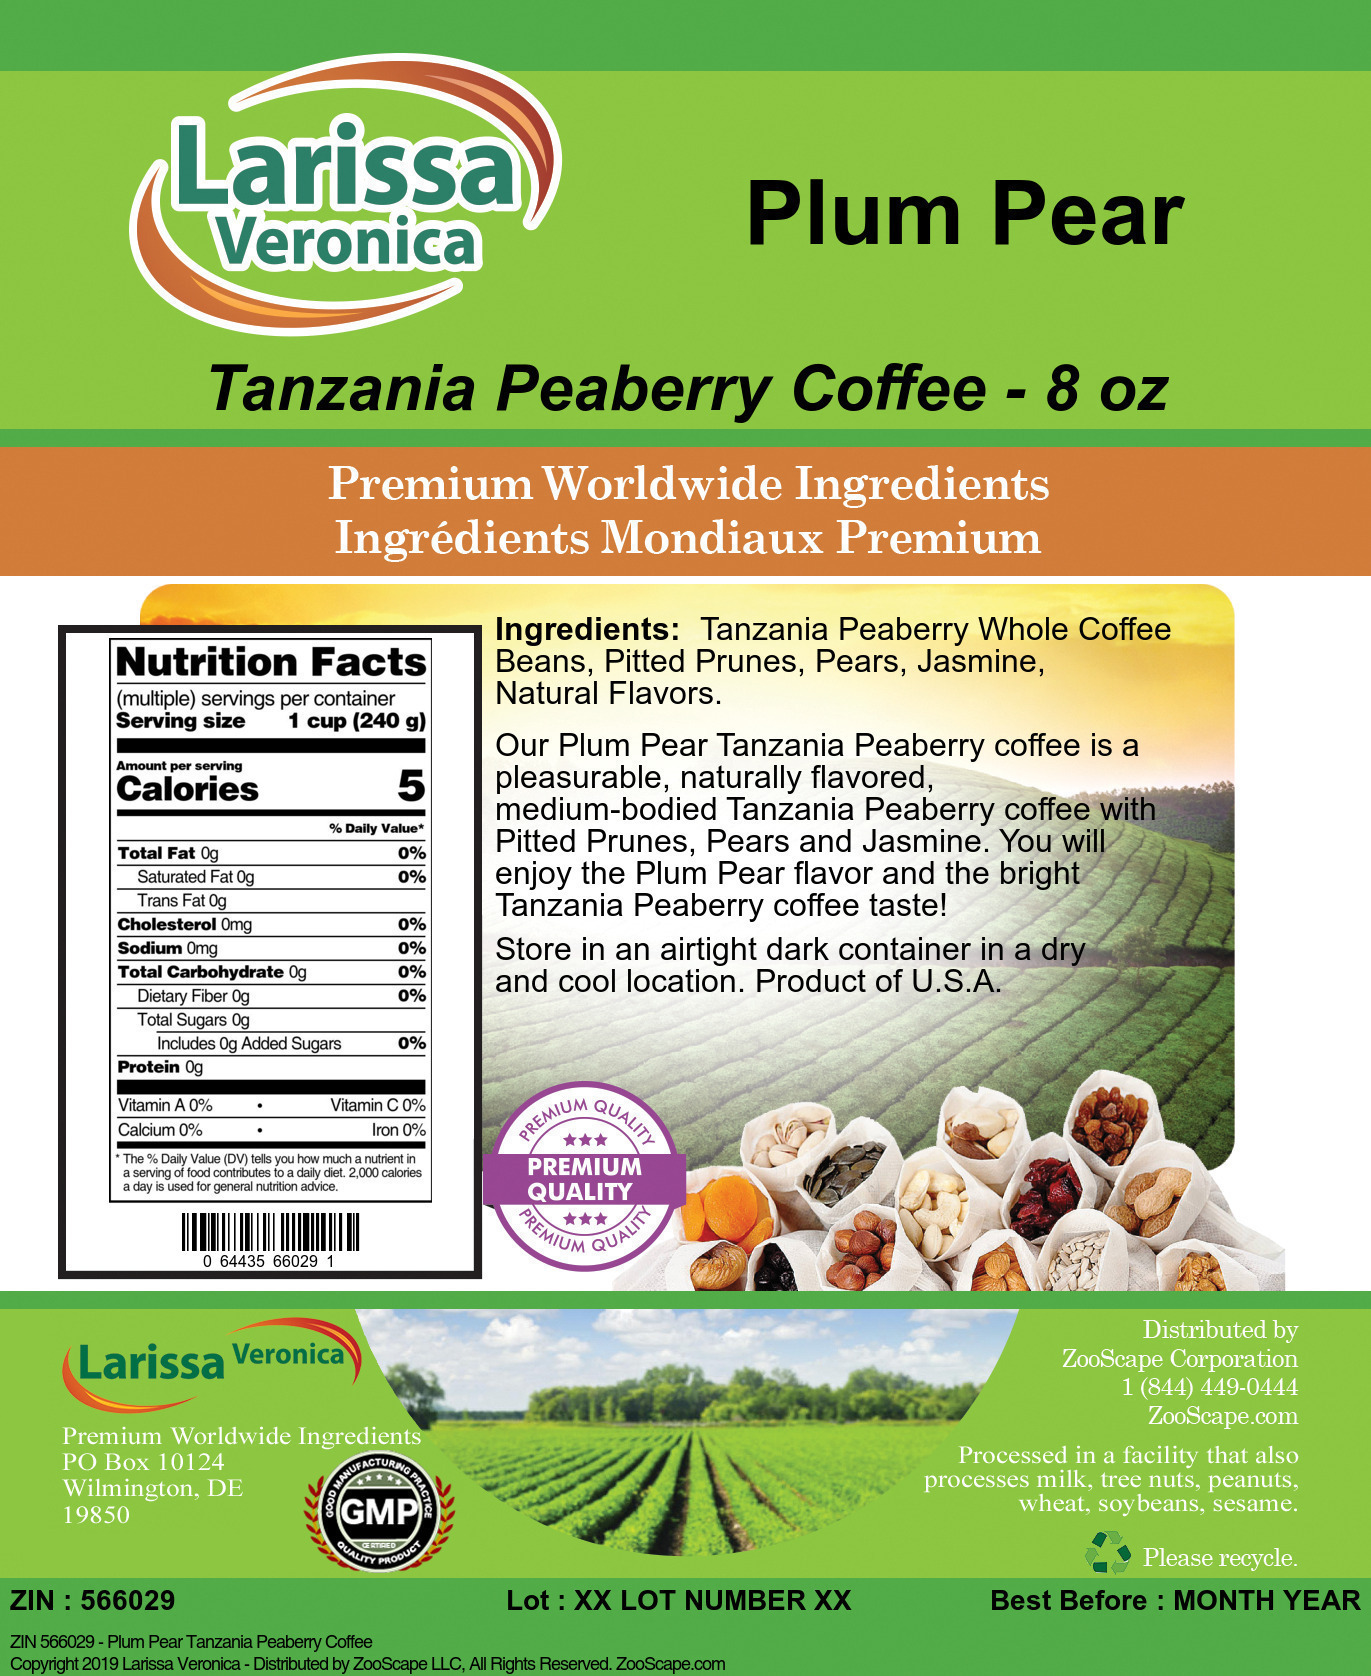 Plum Pear Tanzania Peaberry Coffee - Label